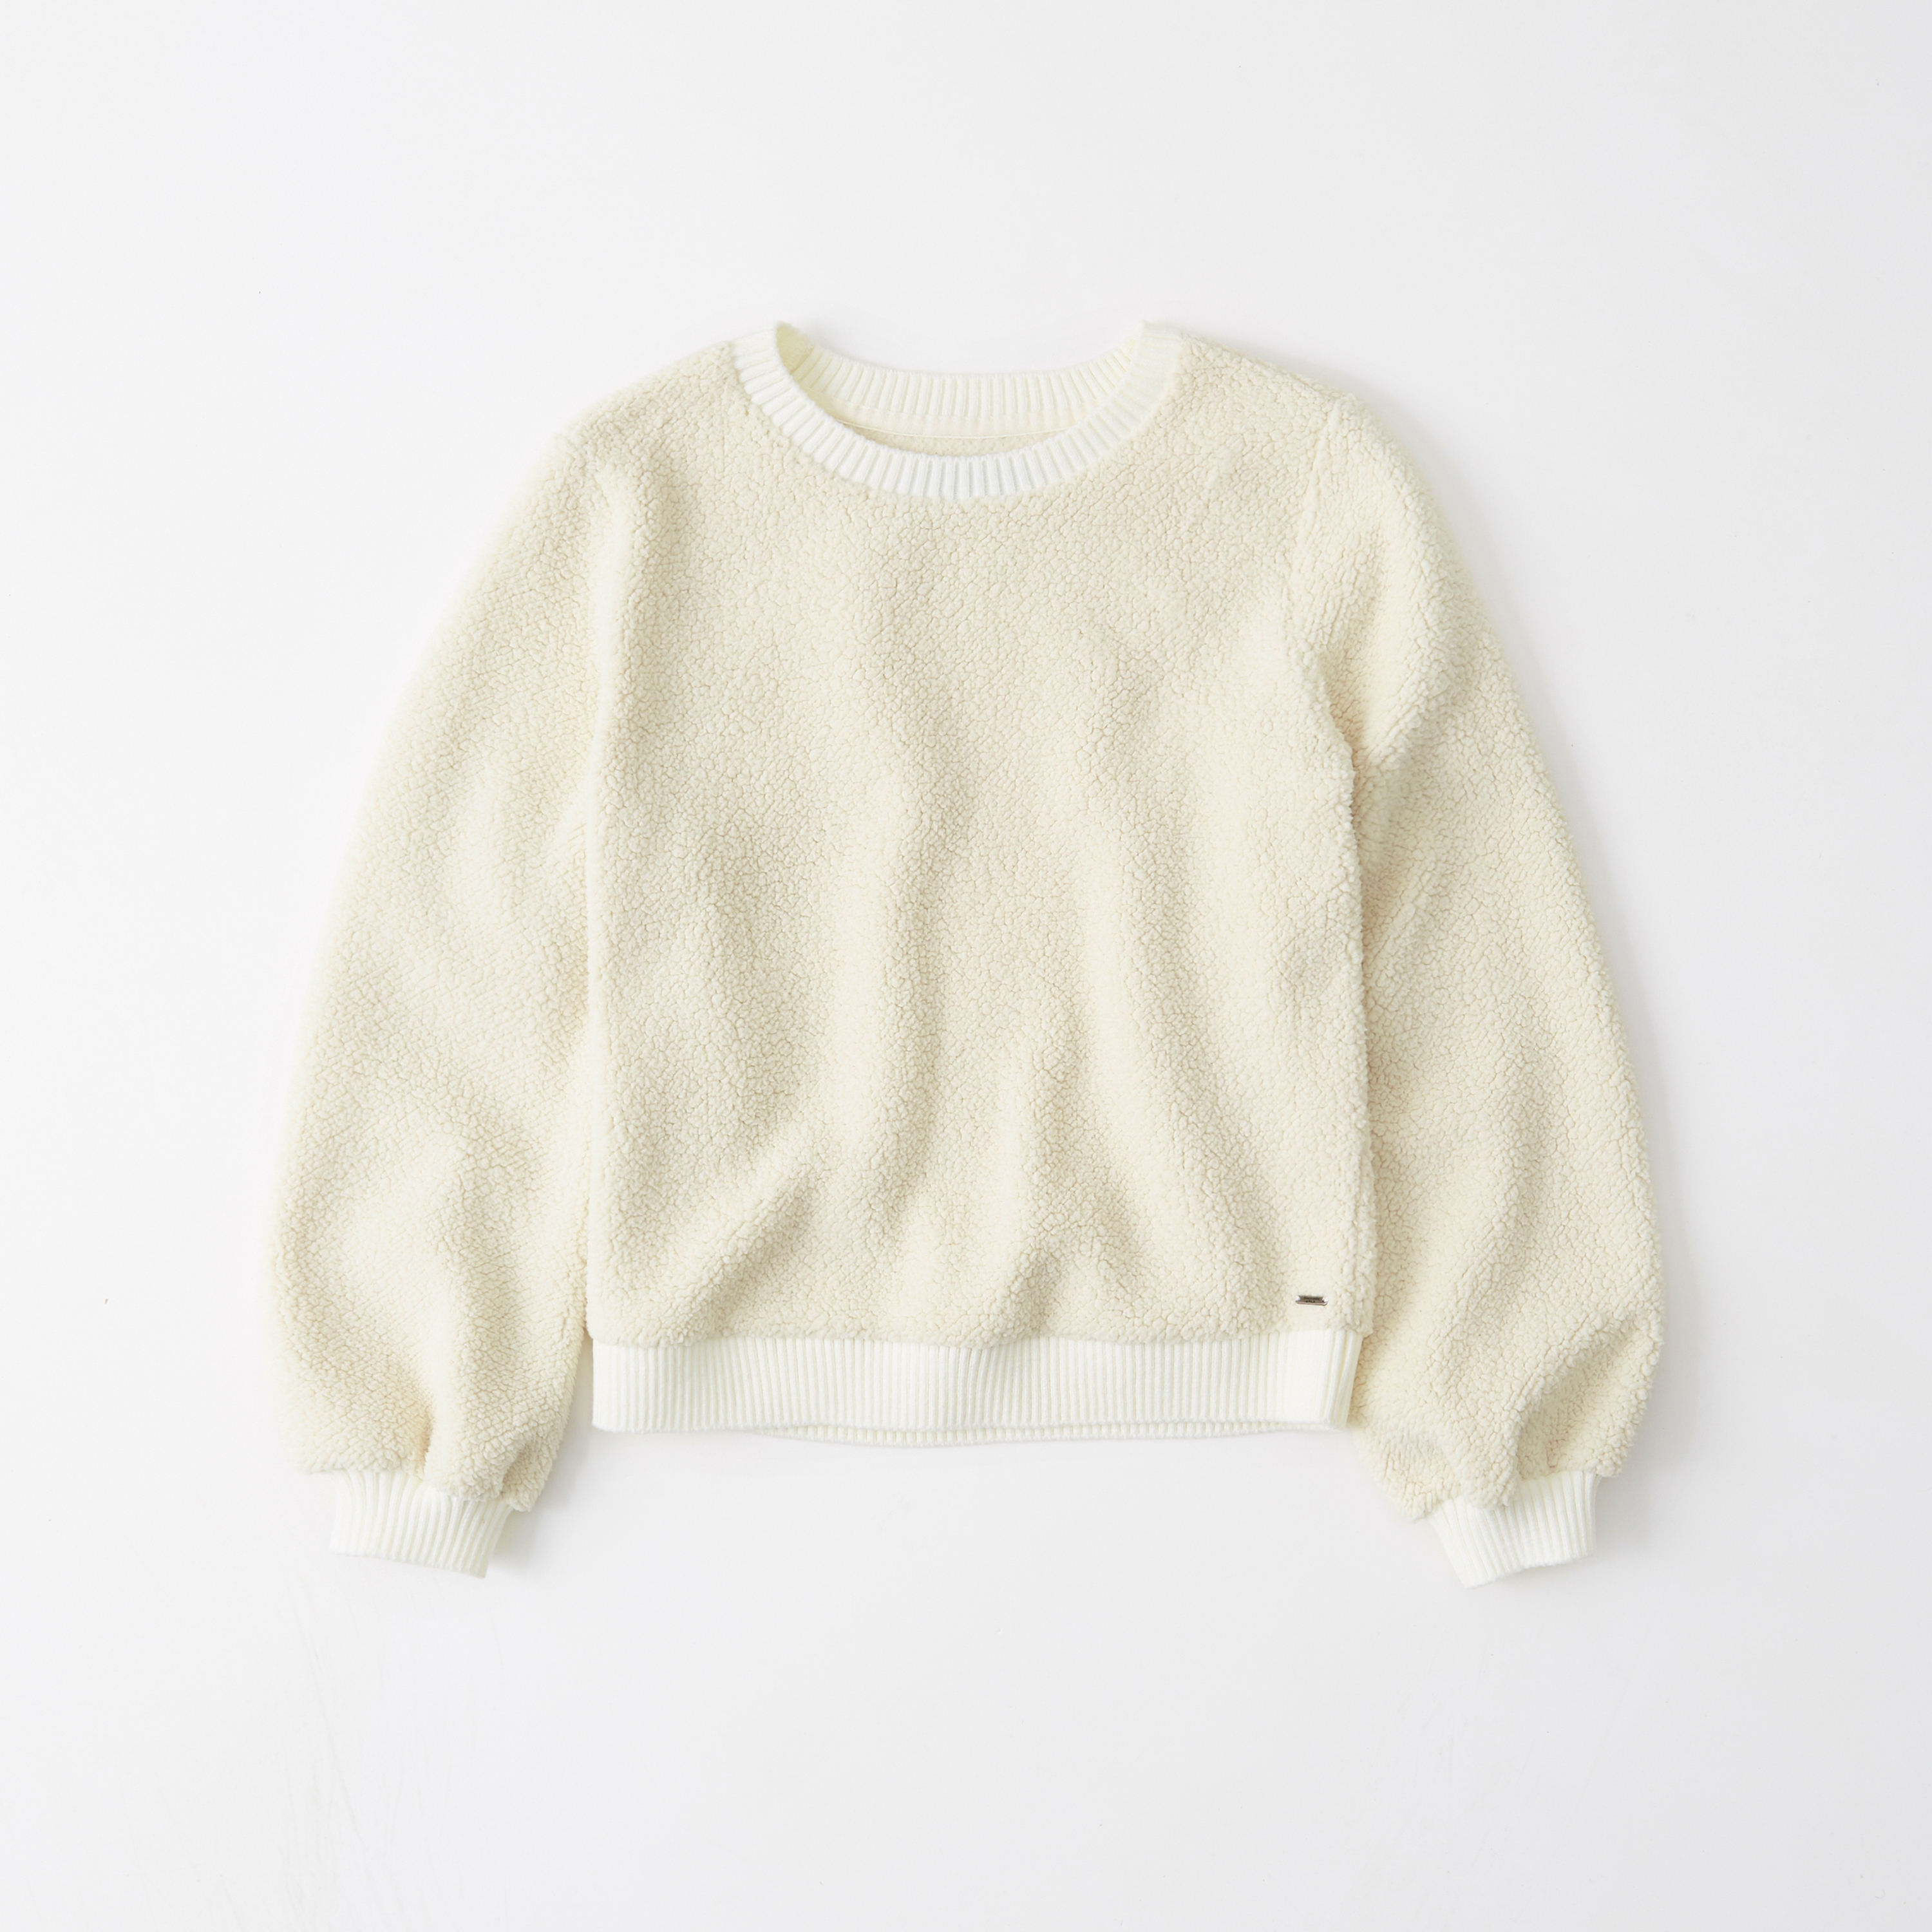 abercrombie sherpa sweater